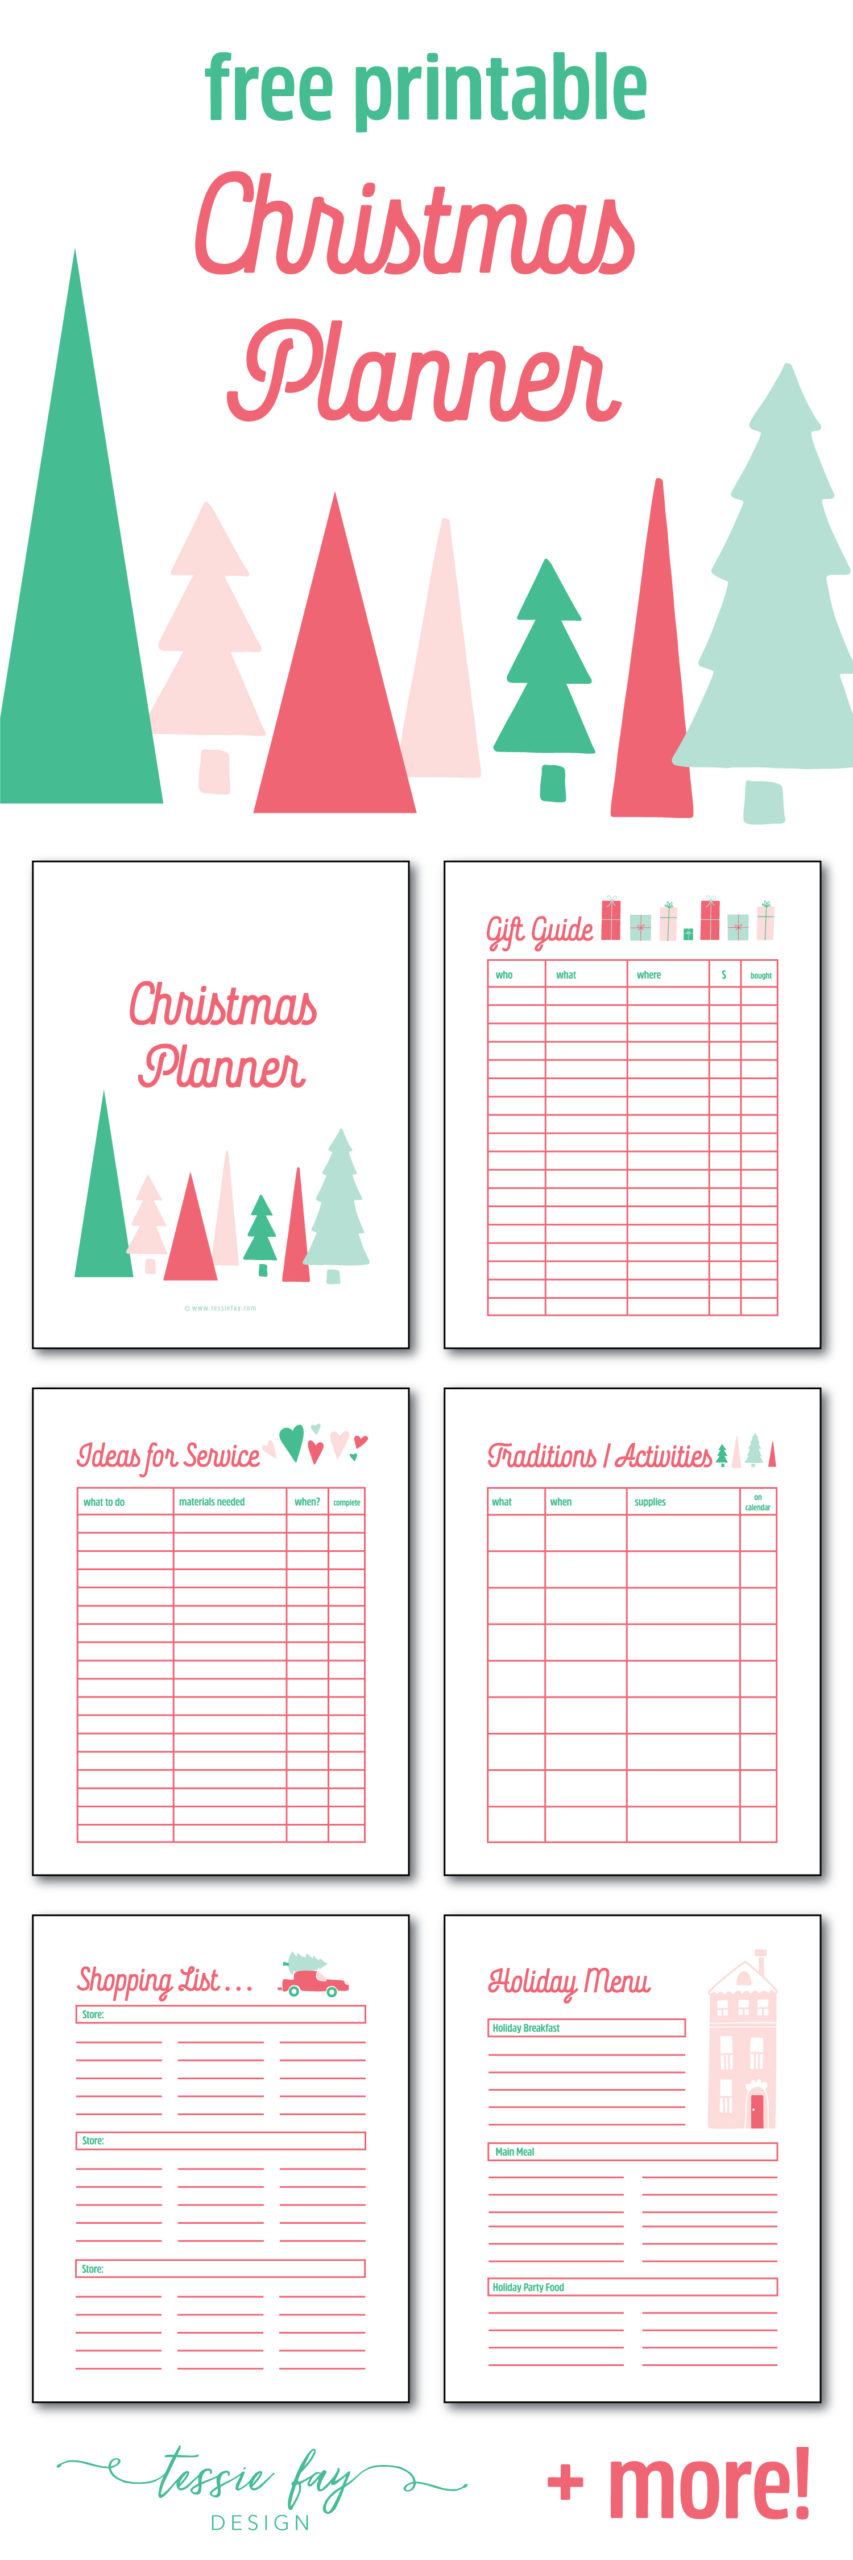 Free-Printable-Christmas-Planner.jpg